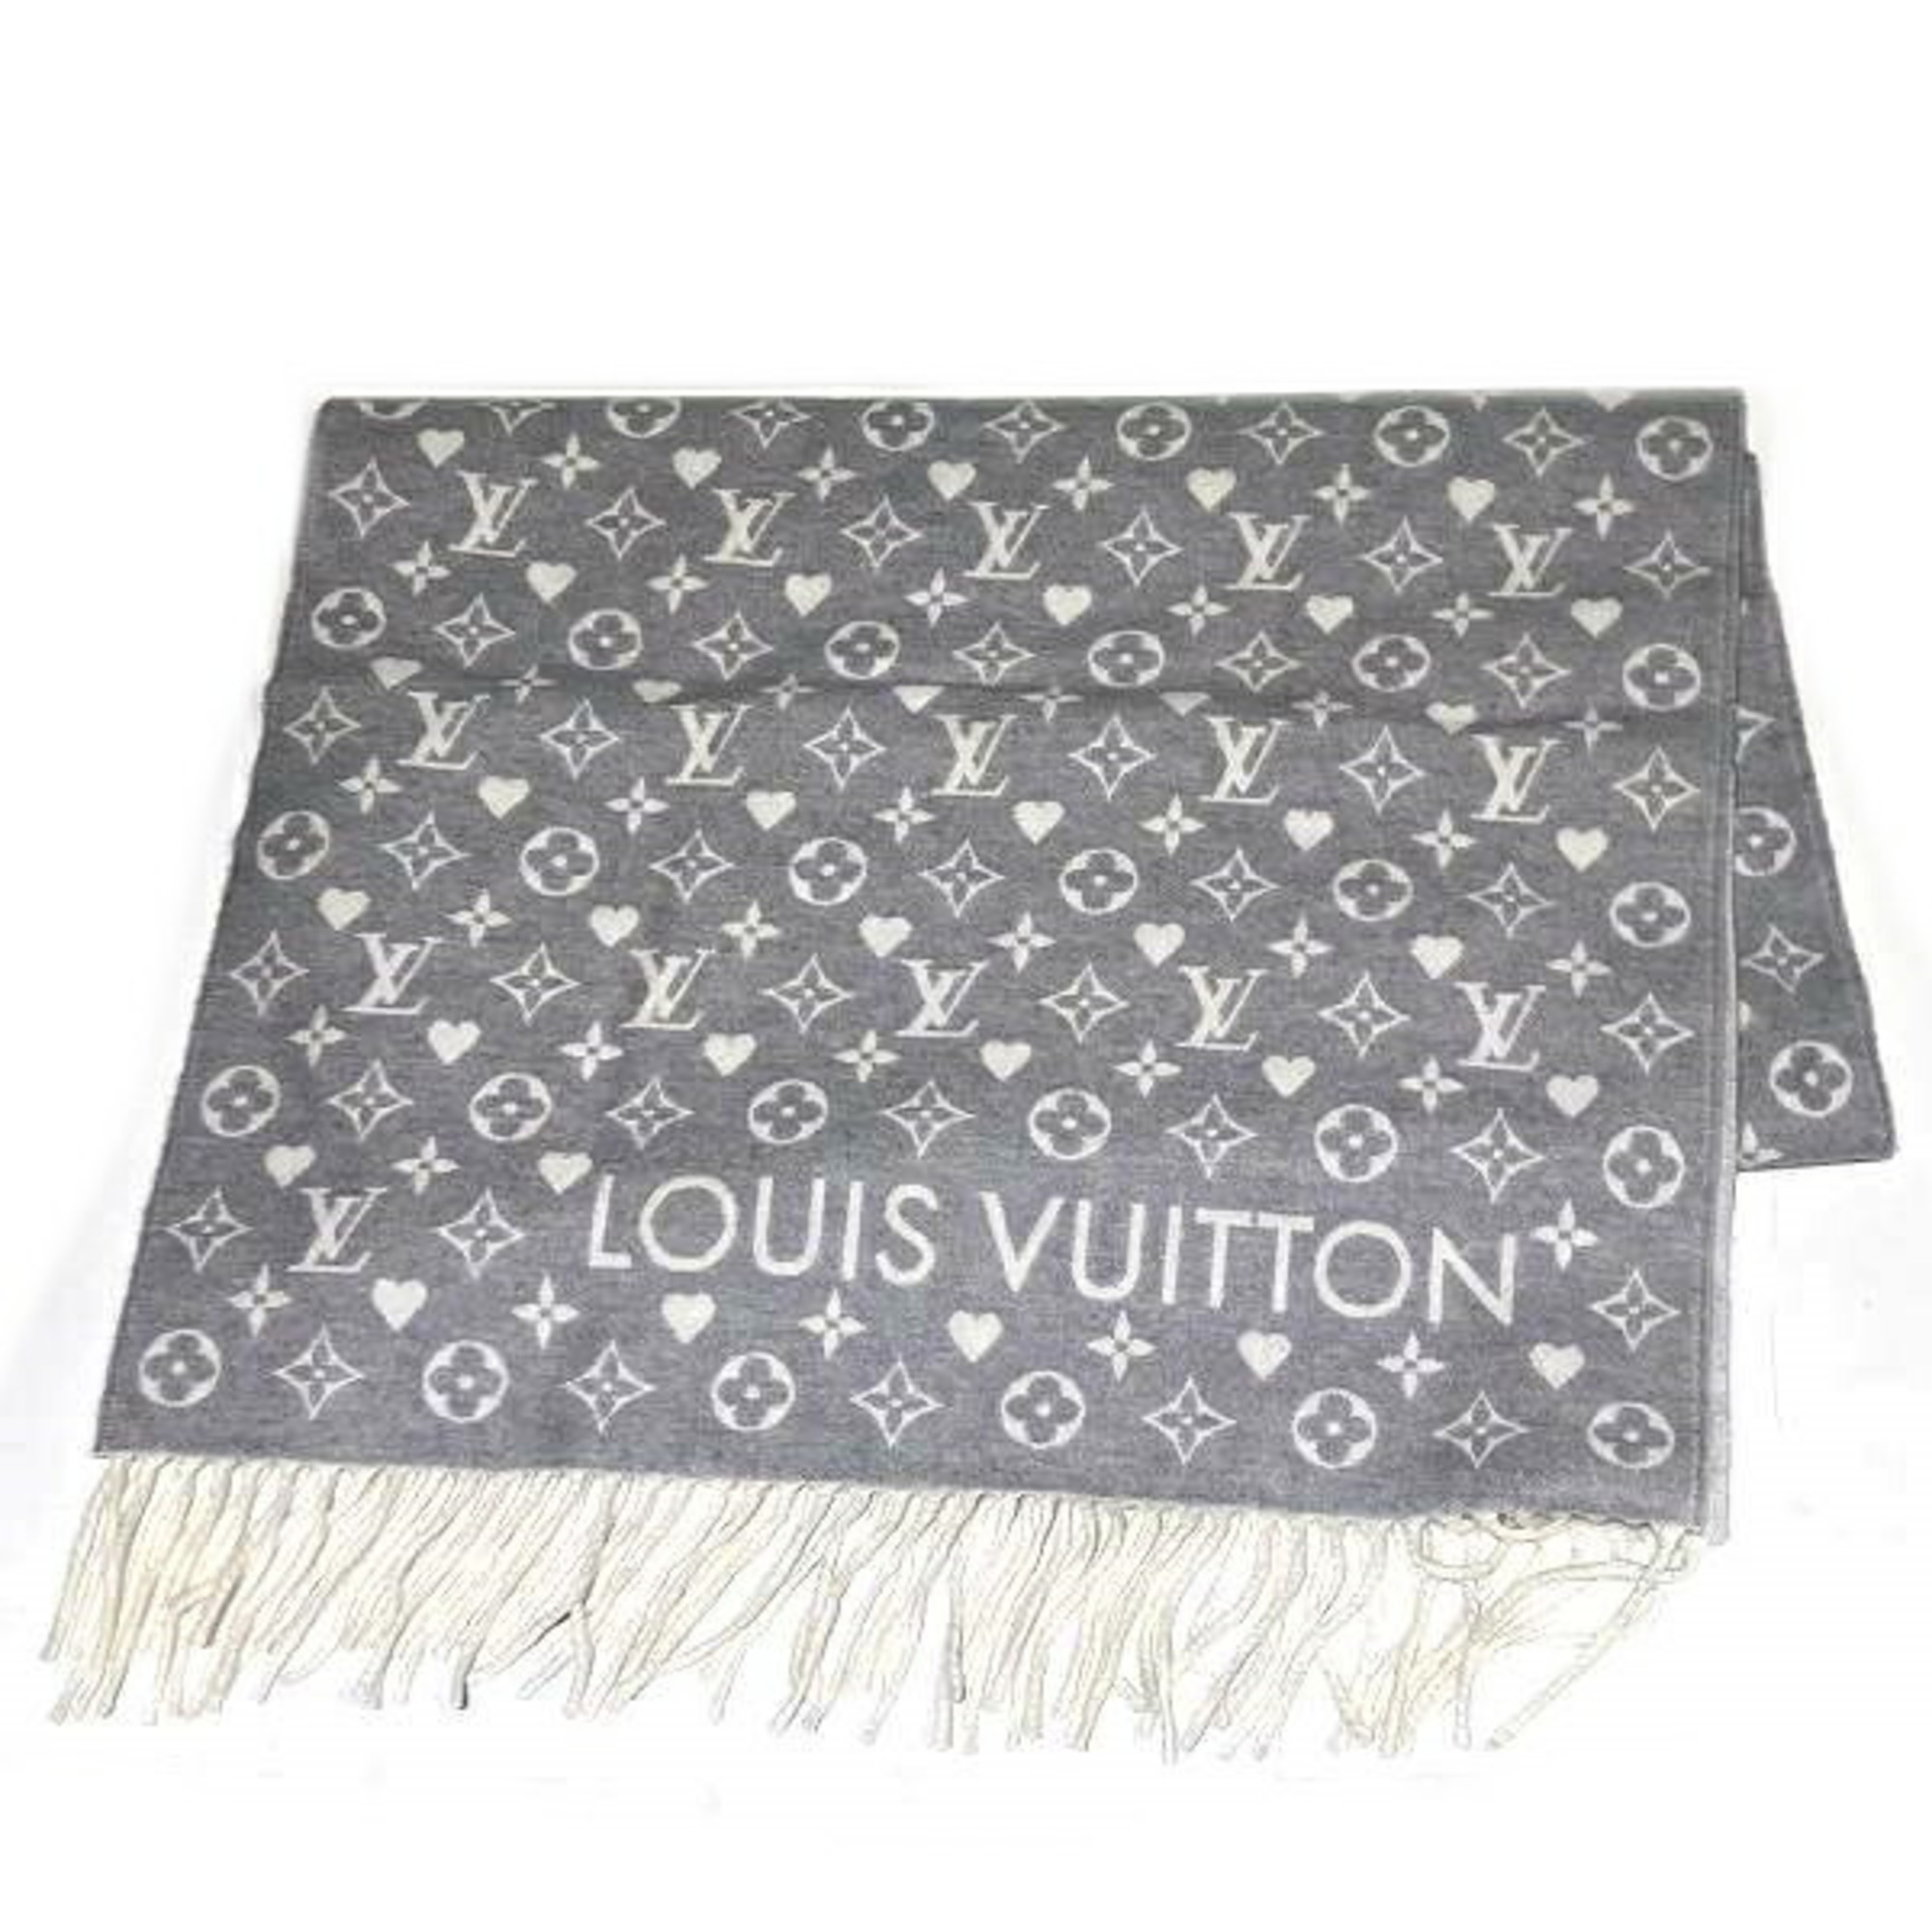 Louis Vuitton Echarpe Game On M77641 Accessories Scarves Men's Women's